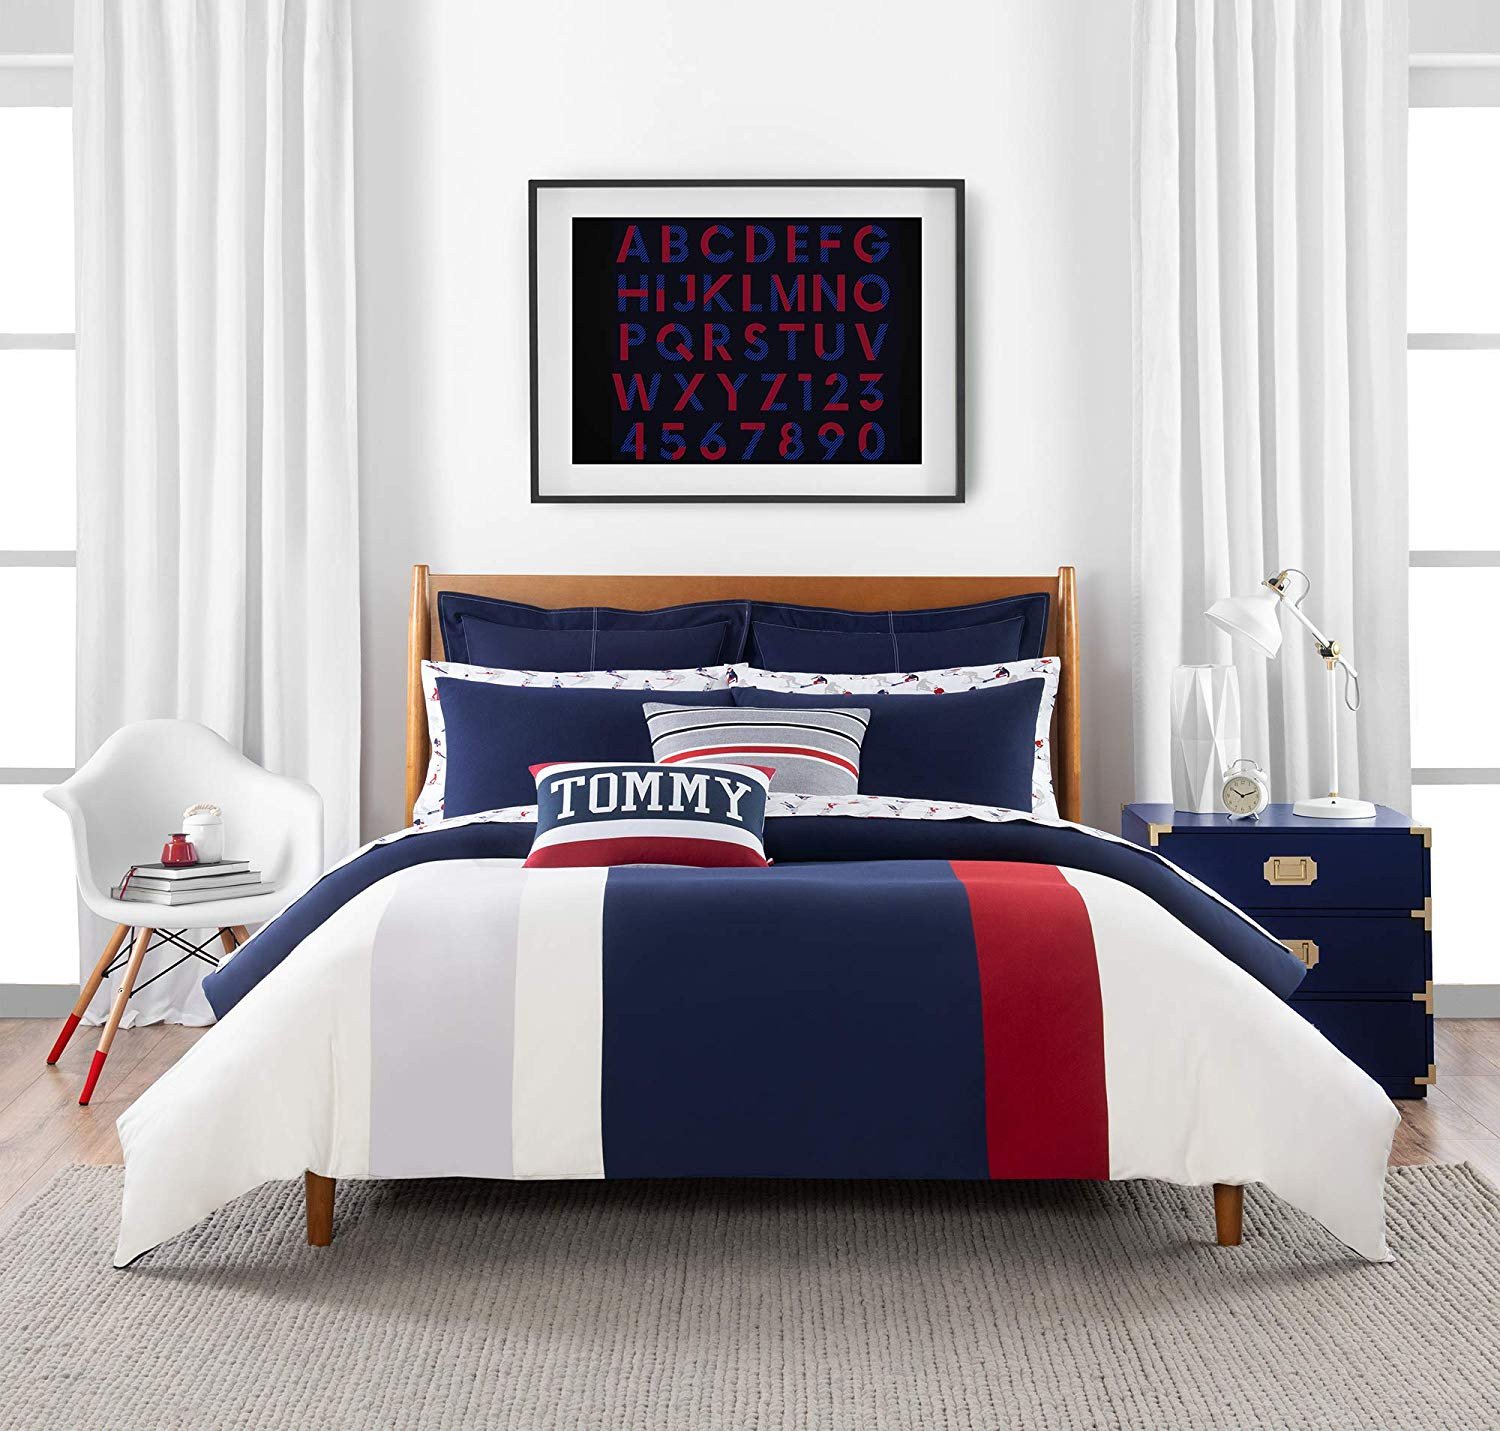 Complete Queen Bedroom Set New Amazon tommy Hilfiger Clash Of 85 Stripe Bedding